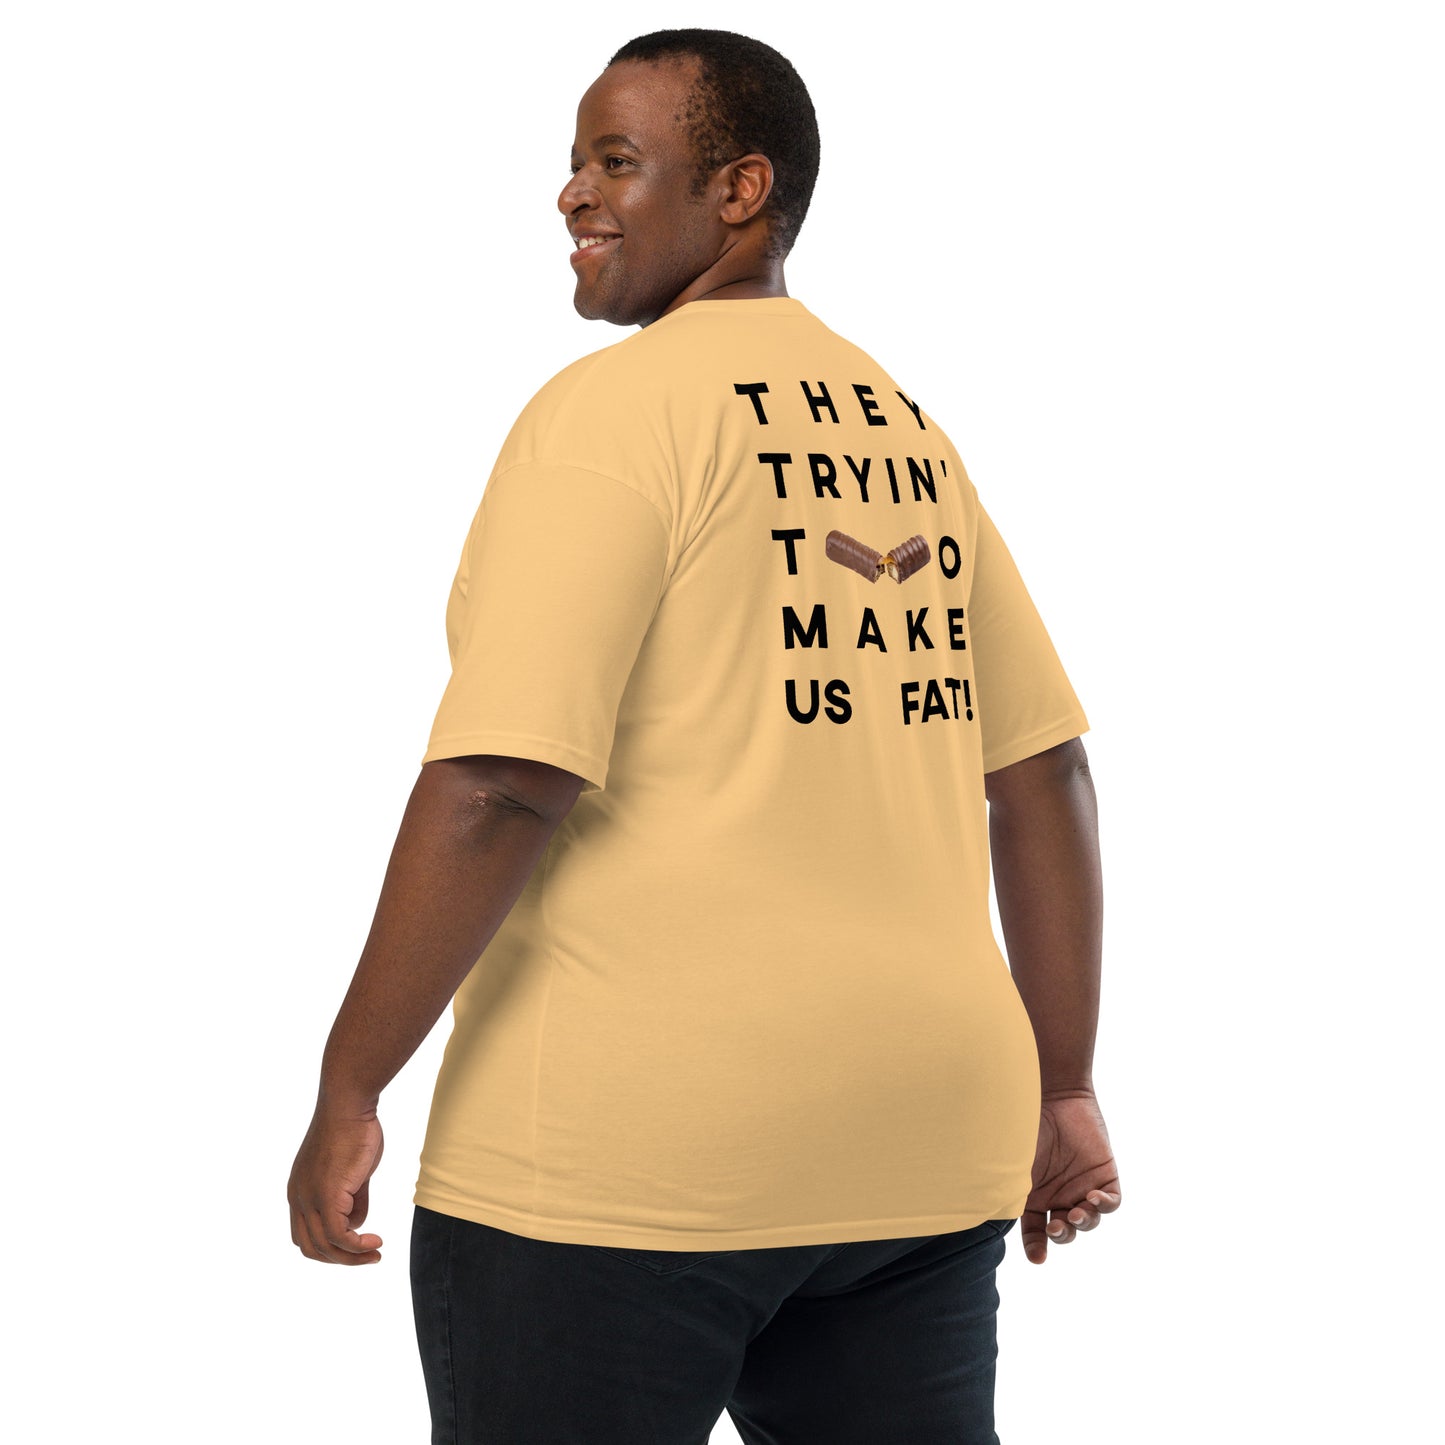 They tryin to make us fat Twix Men’s premium heavyweight tee